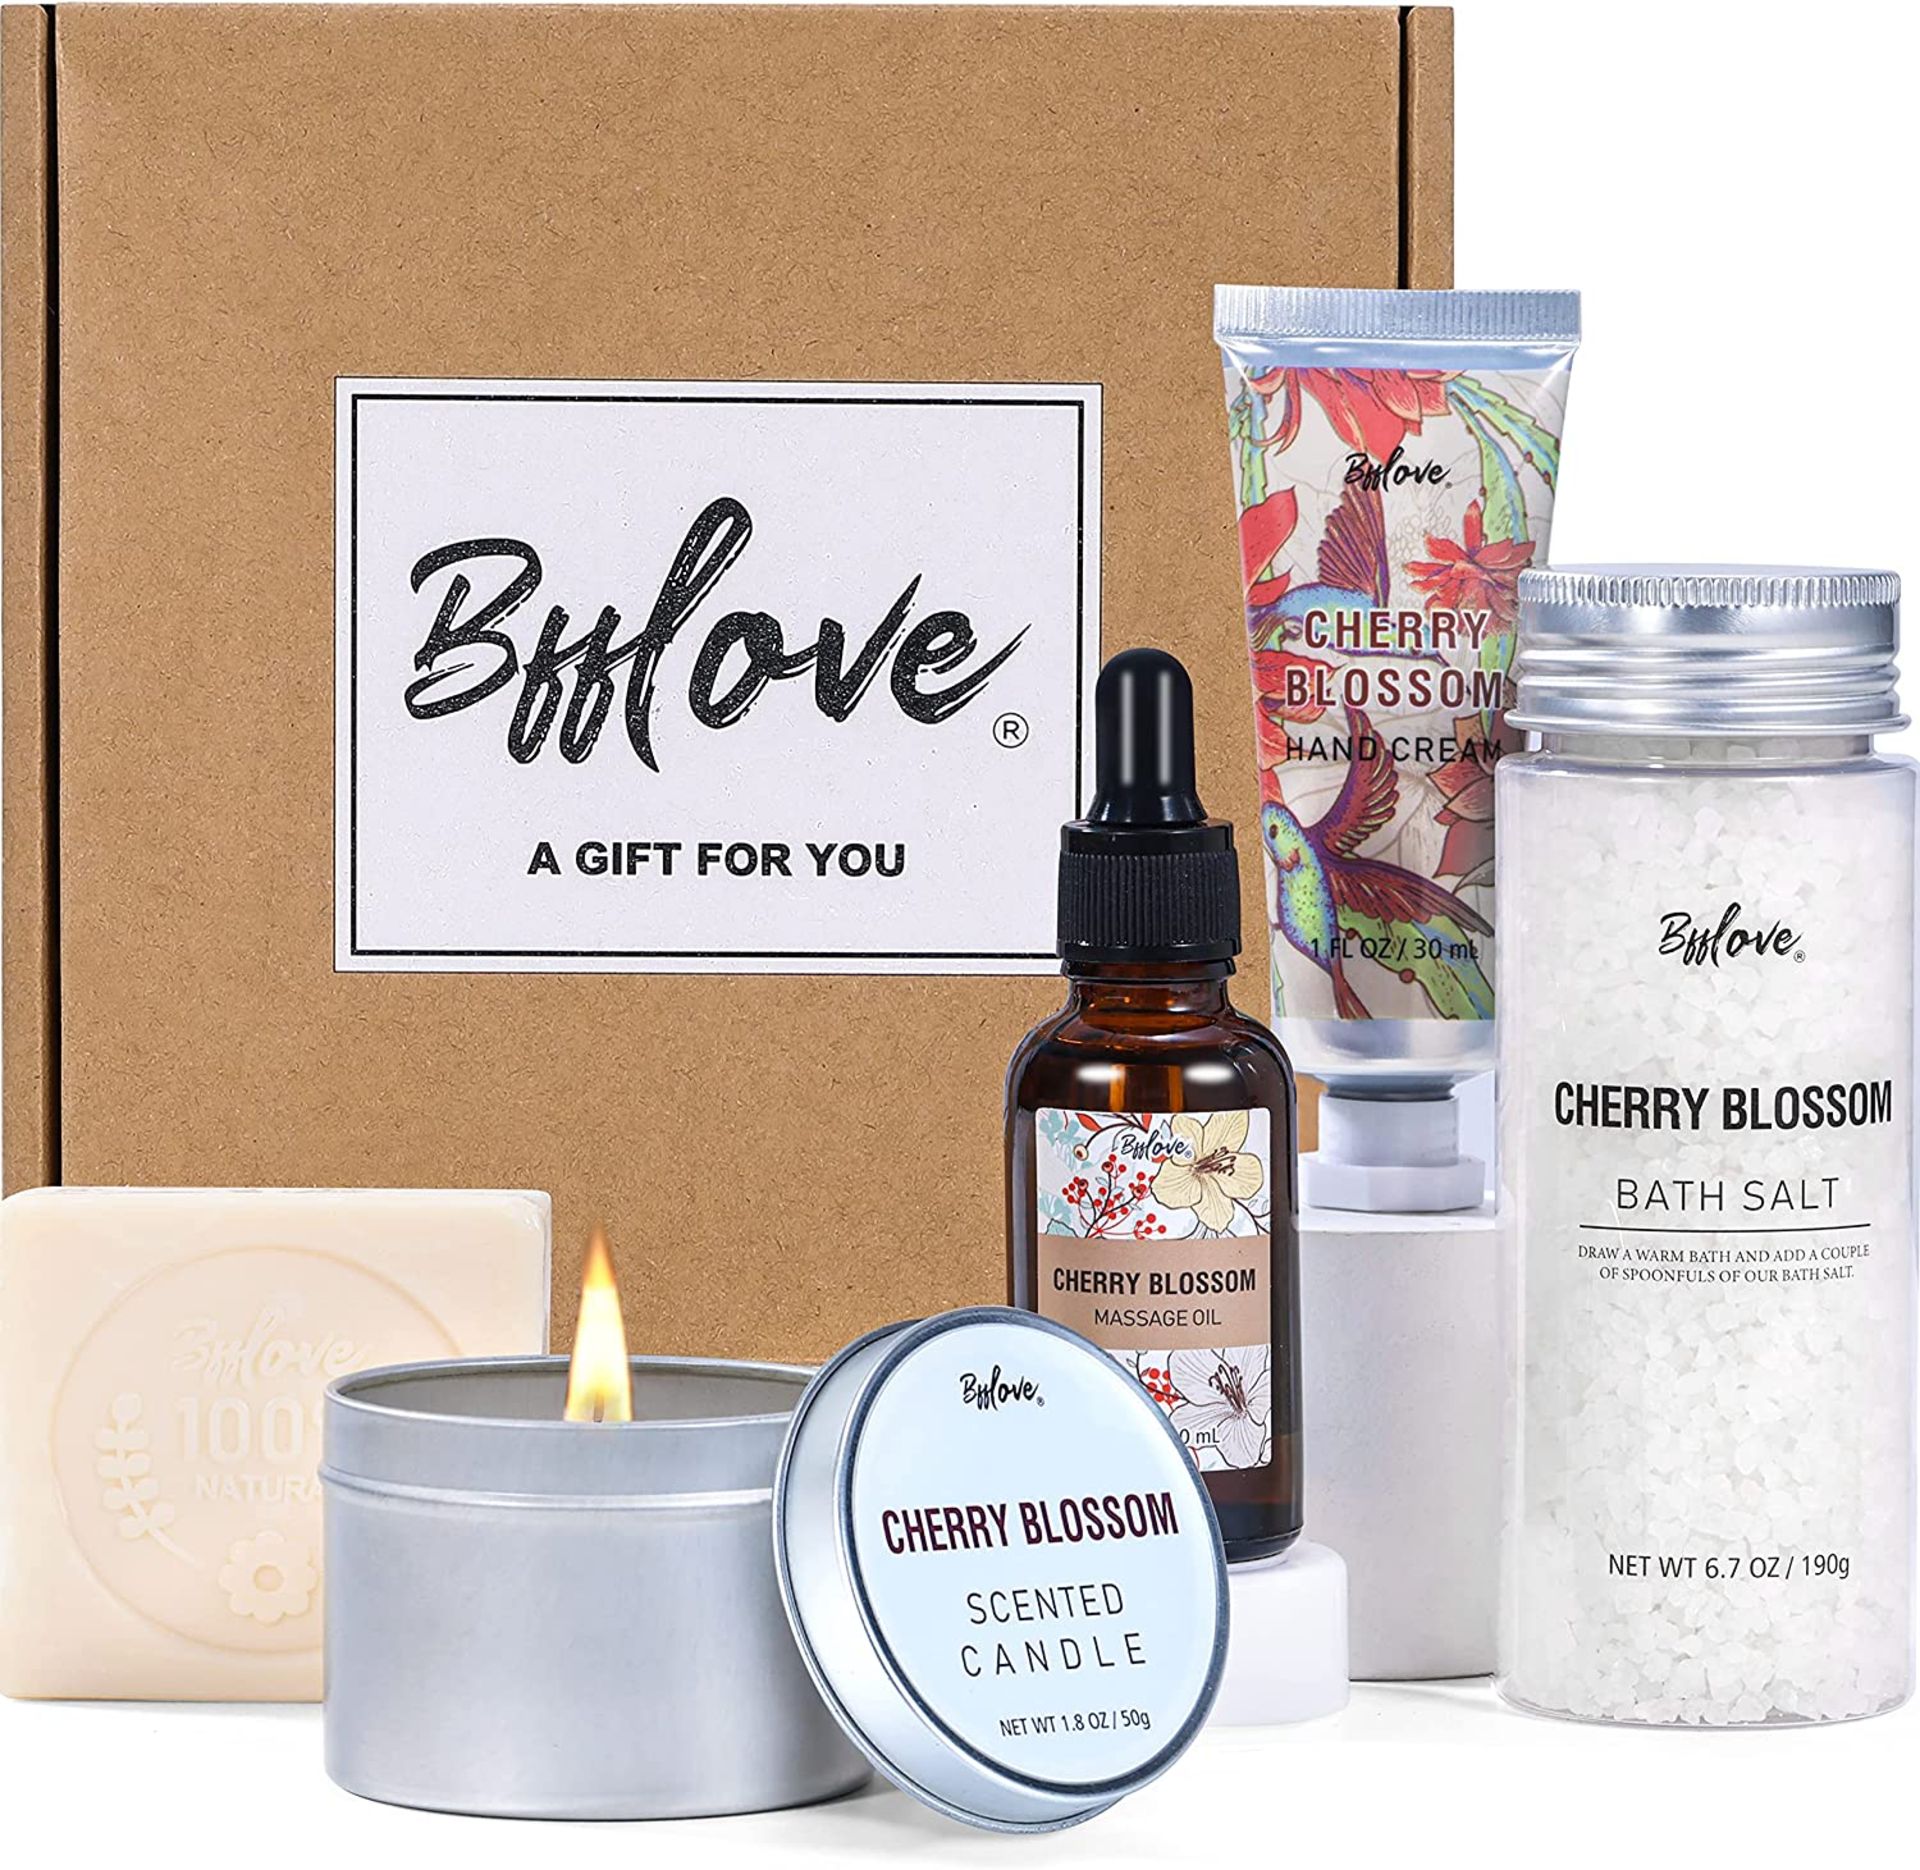 BFF LOVE Cherry Blossom Spa Gift Box